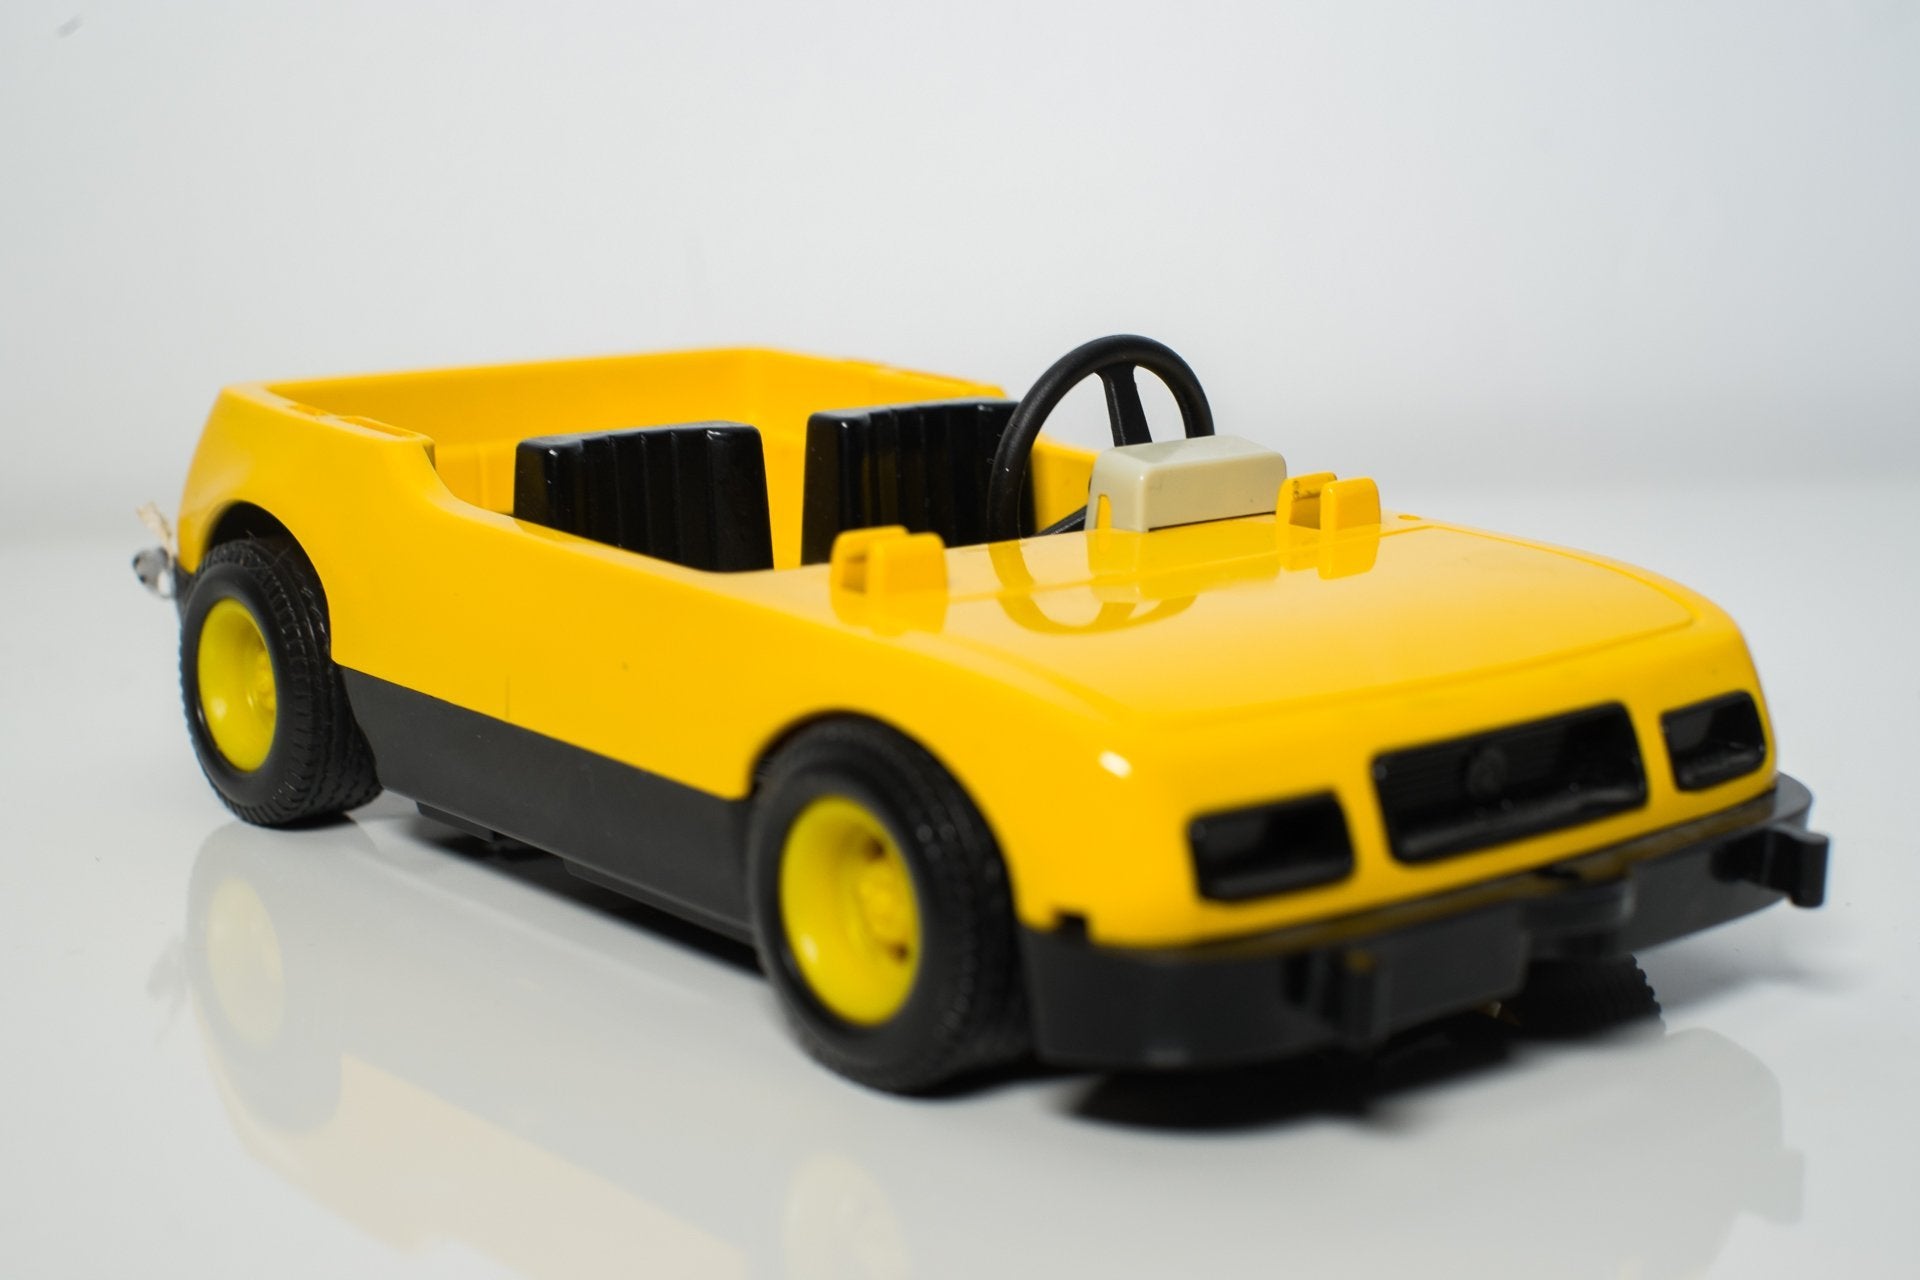 Vintage Playmobil 3524 Yellow Car (Partial set) - Wood Wood Toys Canada's Favourite Montessori Toy Store